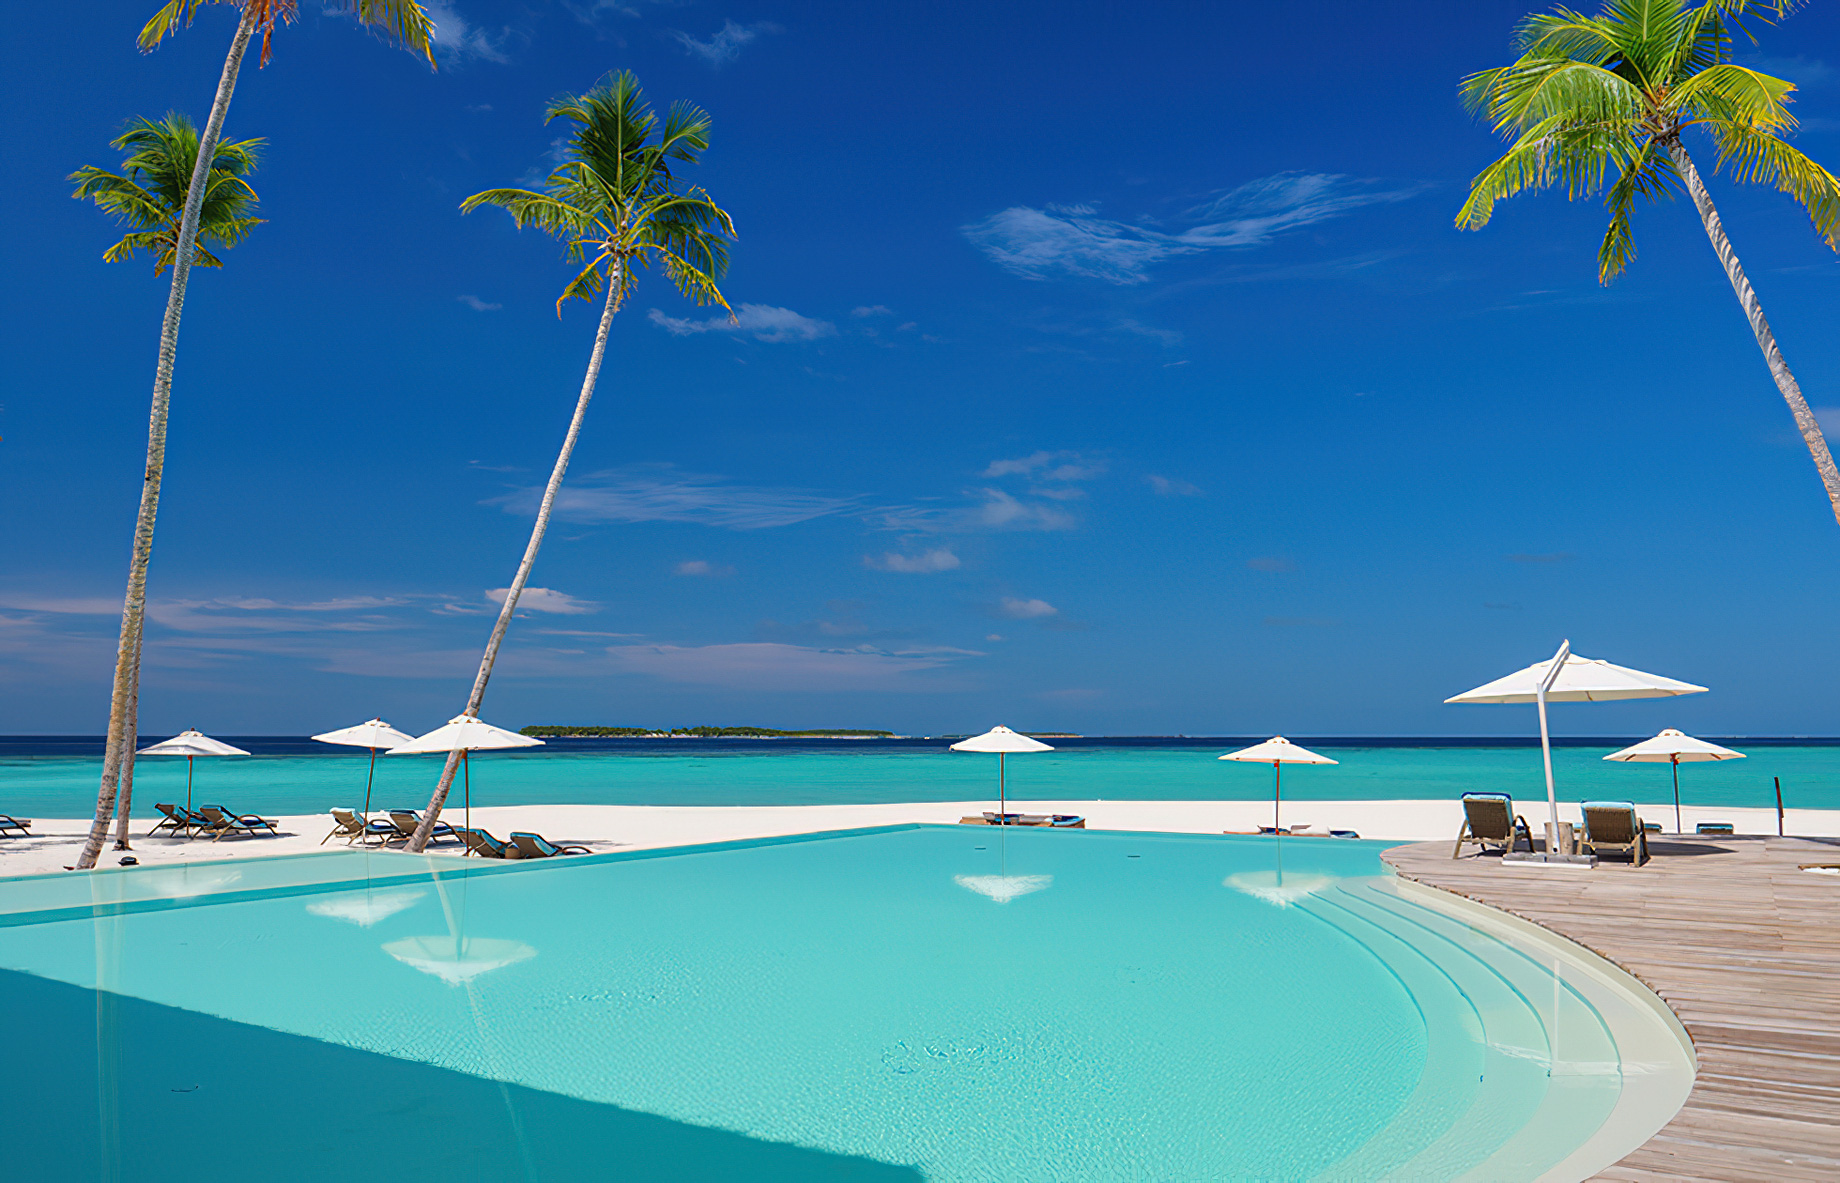 Baglioni Resort Maldives – Maagau Island, Rinbudhoo, Maldives – Infinity Pool Ocean View